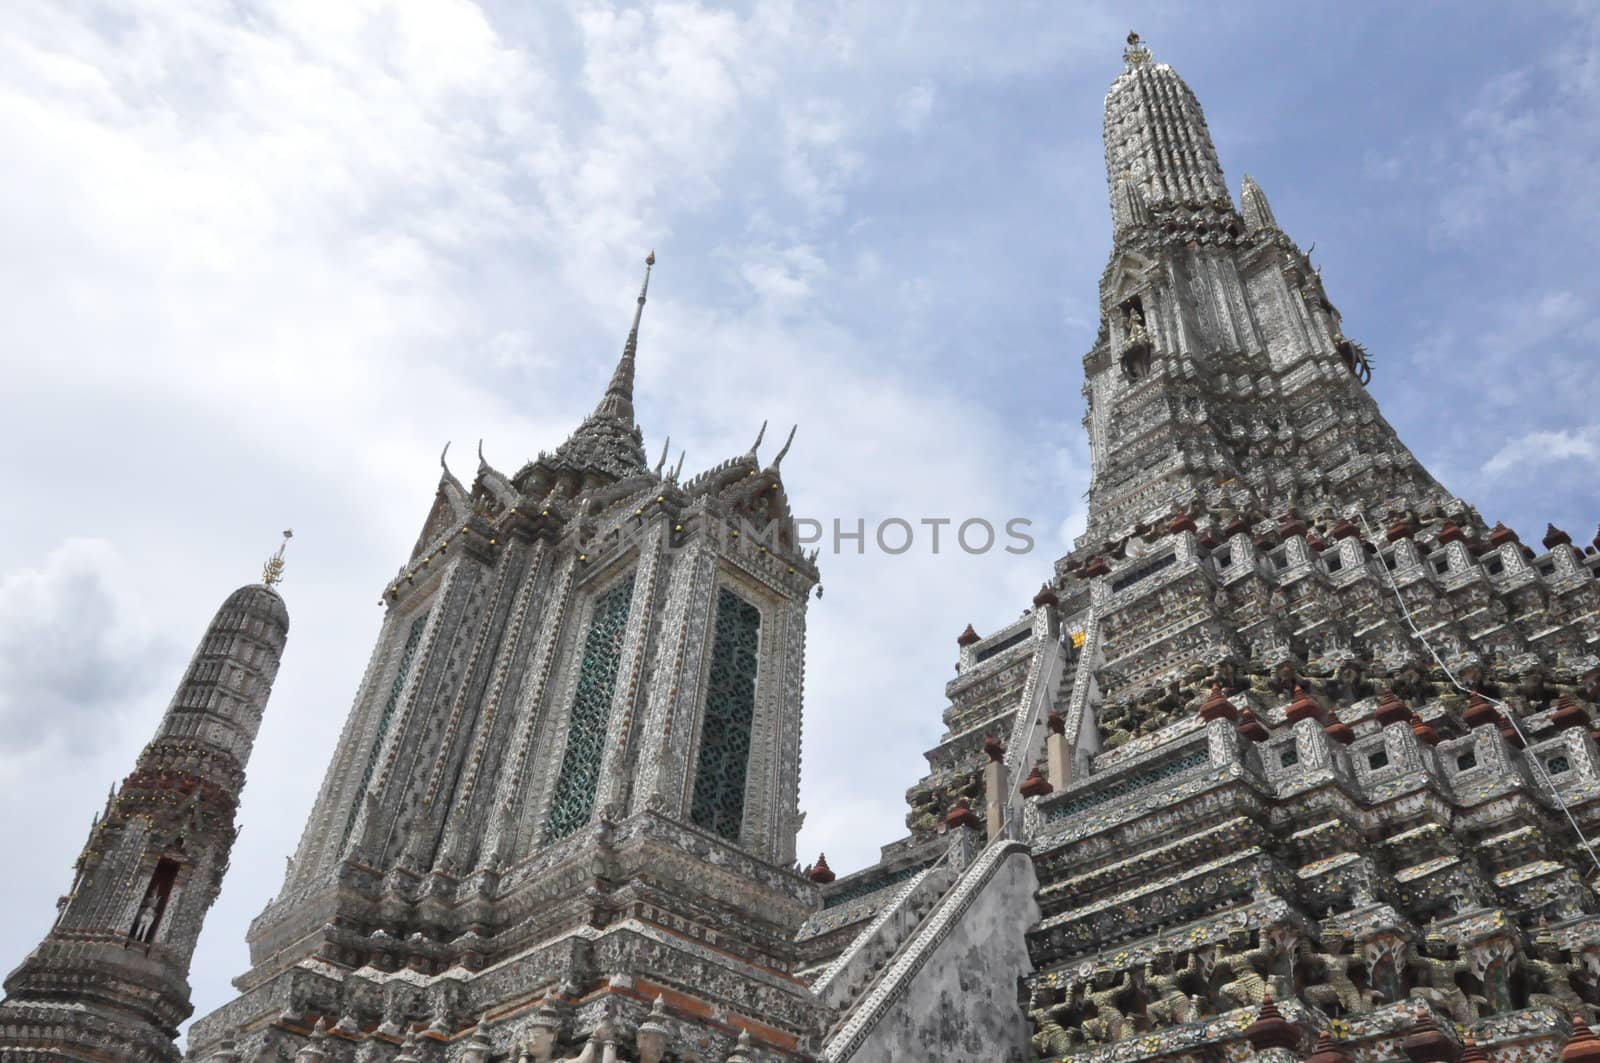 Wat Arun (Temple of Dawn) in Bangkok, Thailand